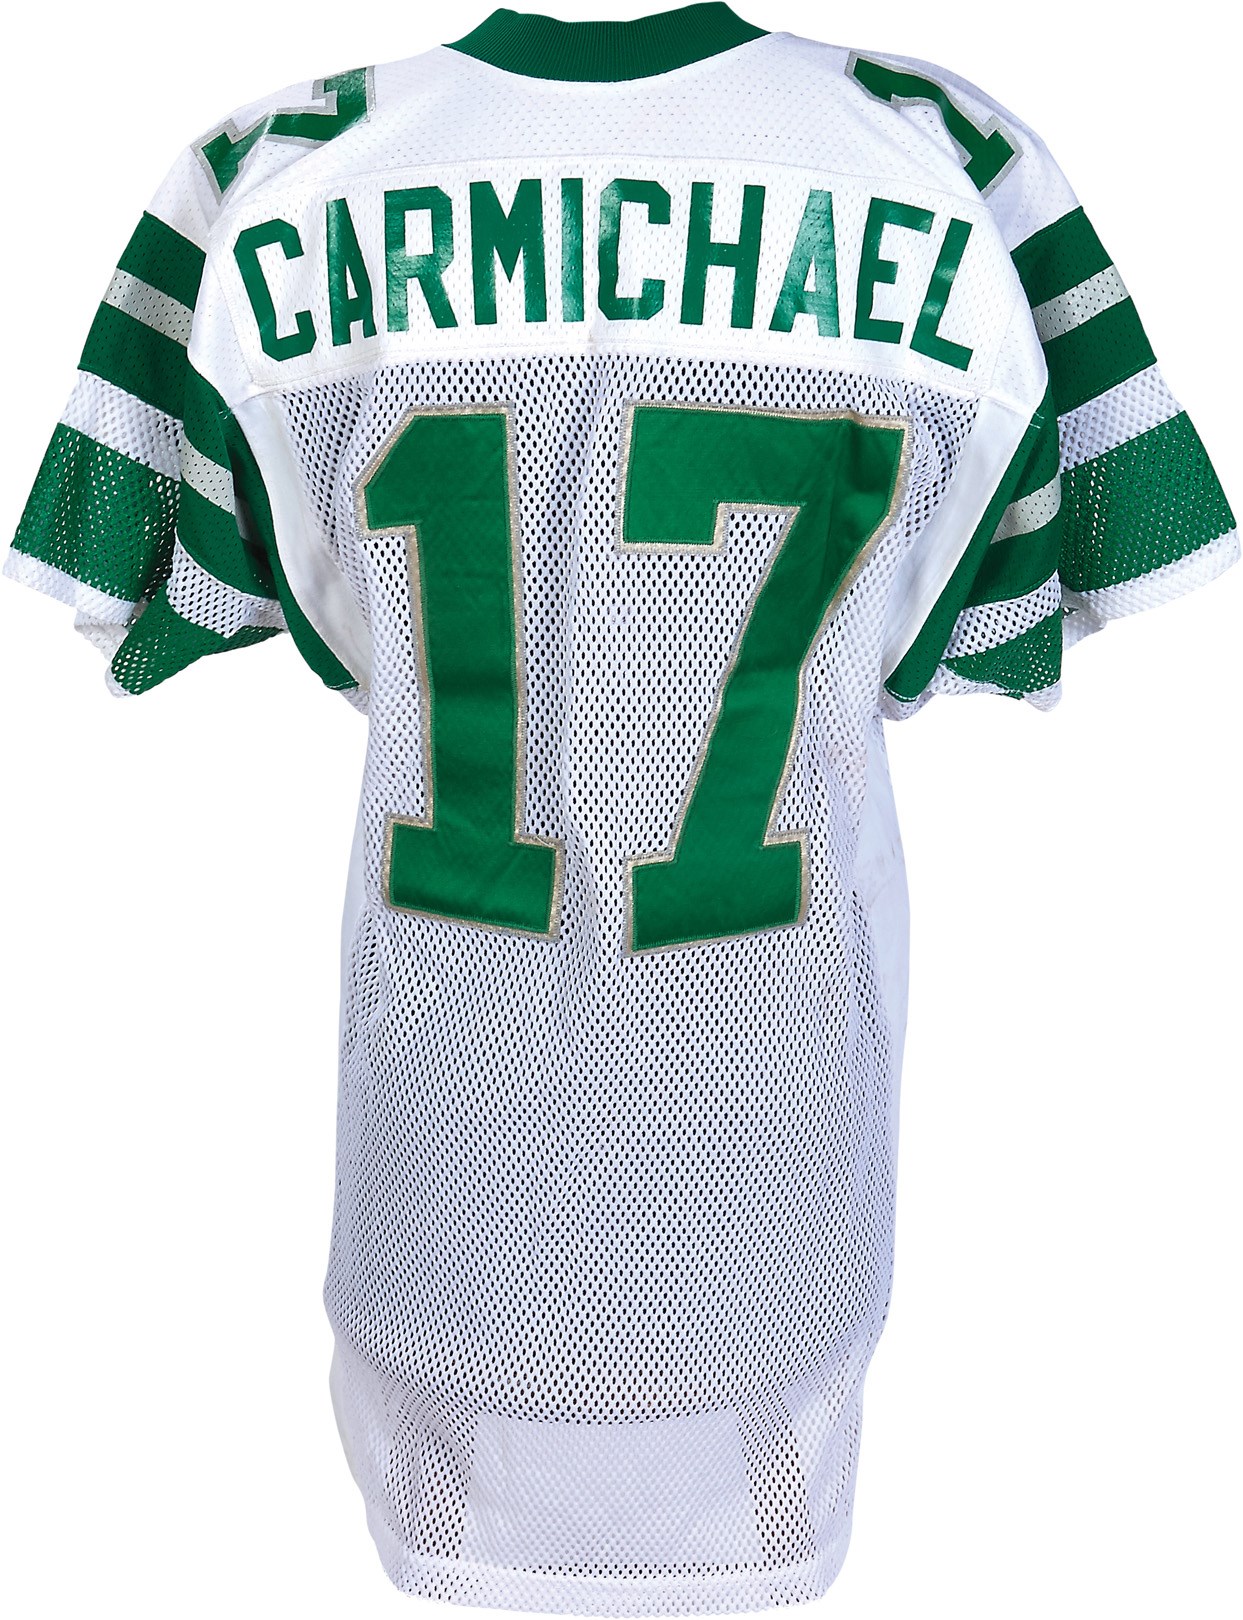 - Mid-1970s Harold Carmichael Philadelphia Eagles Game Worn Jersey